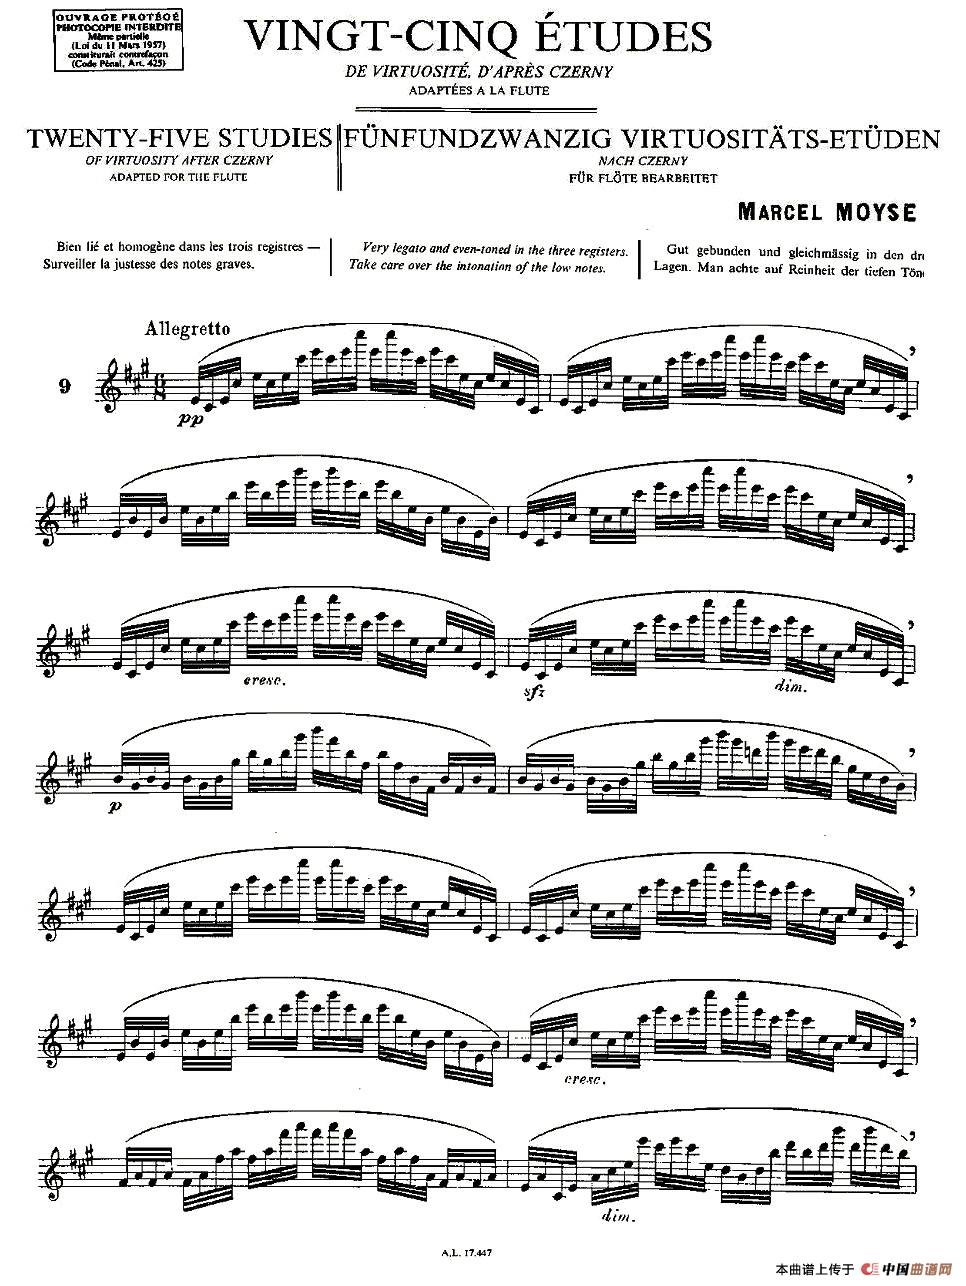 Moyse - 25 Studies after Czerny flute  [9]（25首改编自车尔